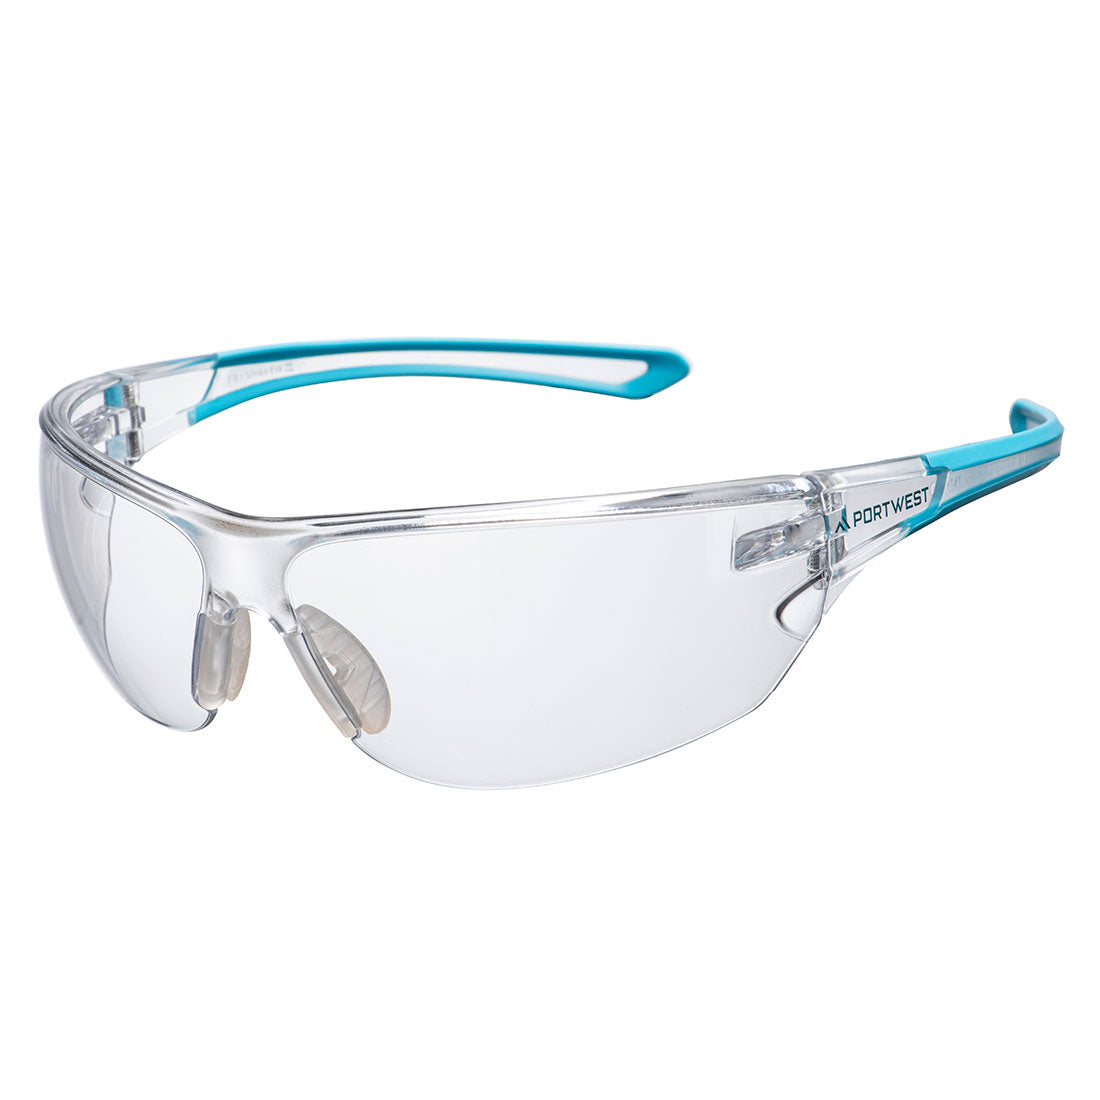 Portwest Ultimo KN Safety Glasses